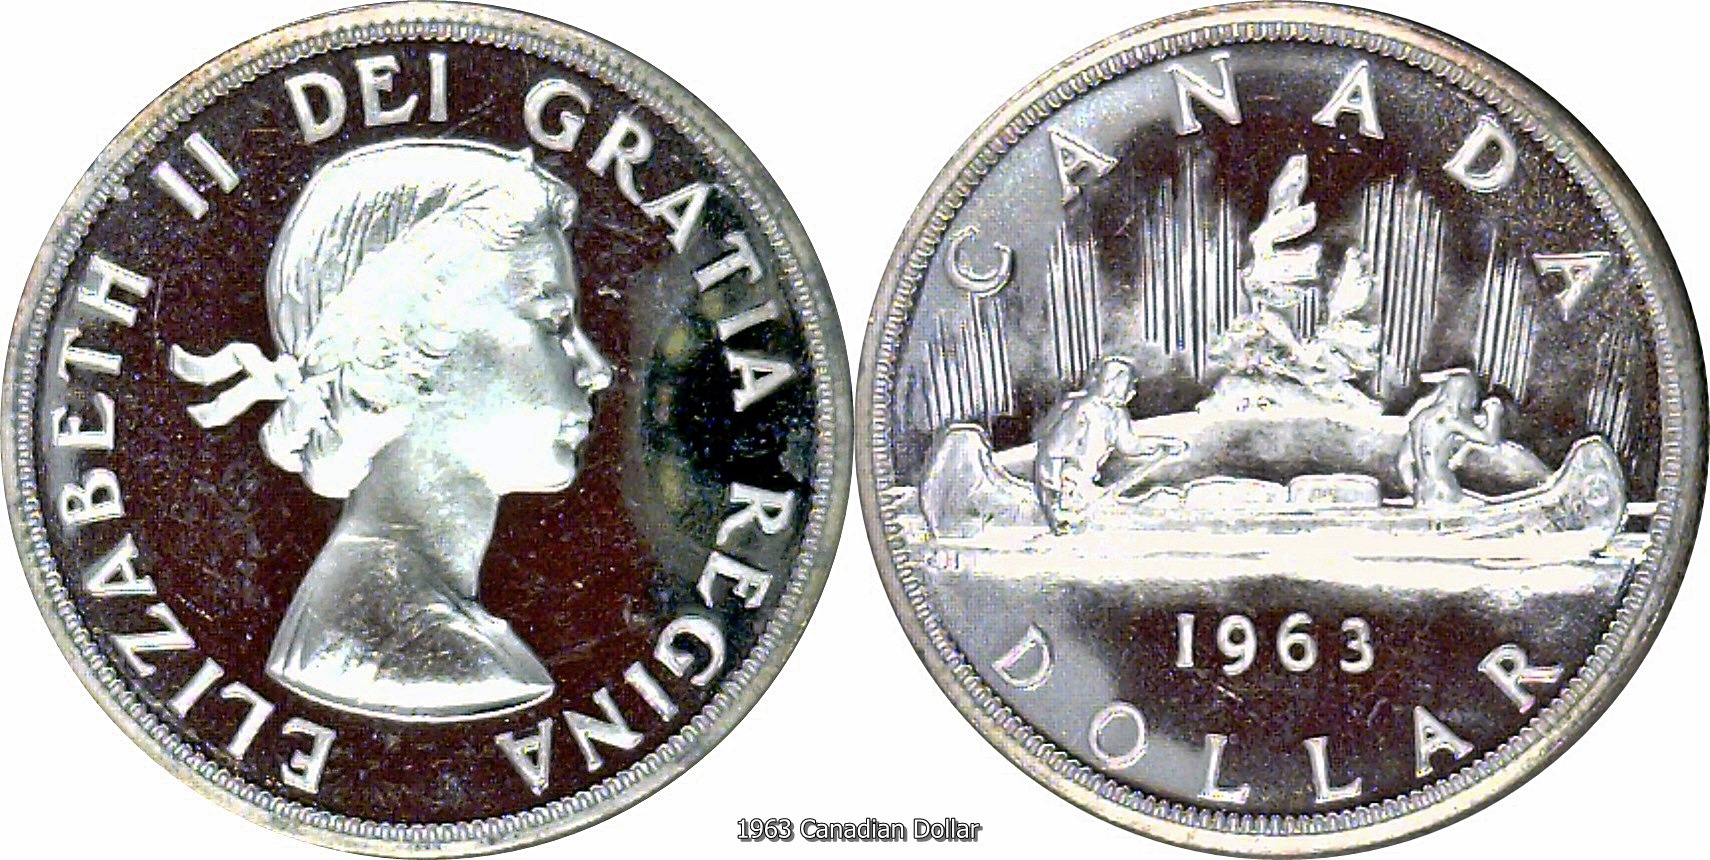 1963 Canadian Dollar.jpg